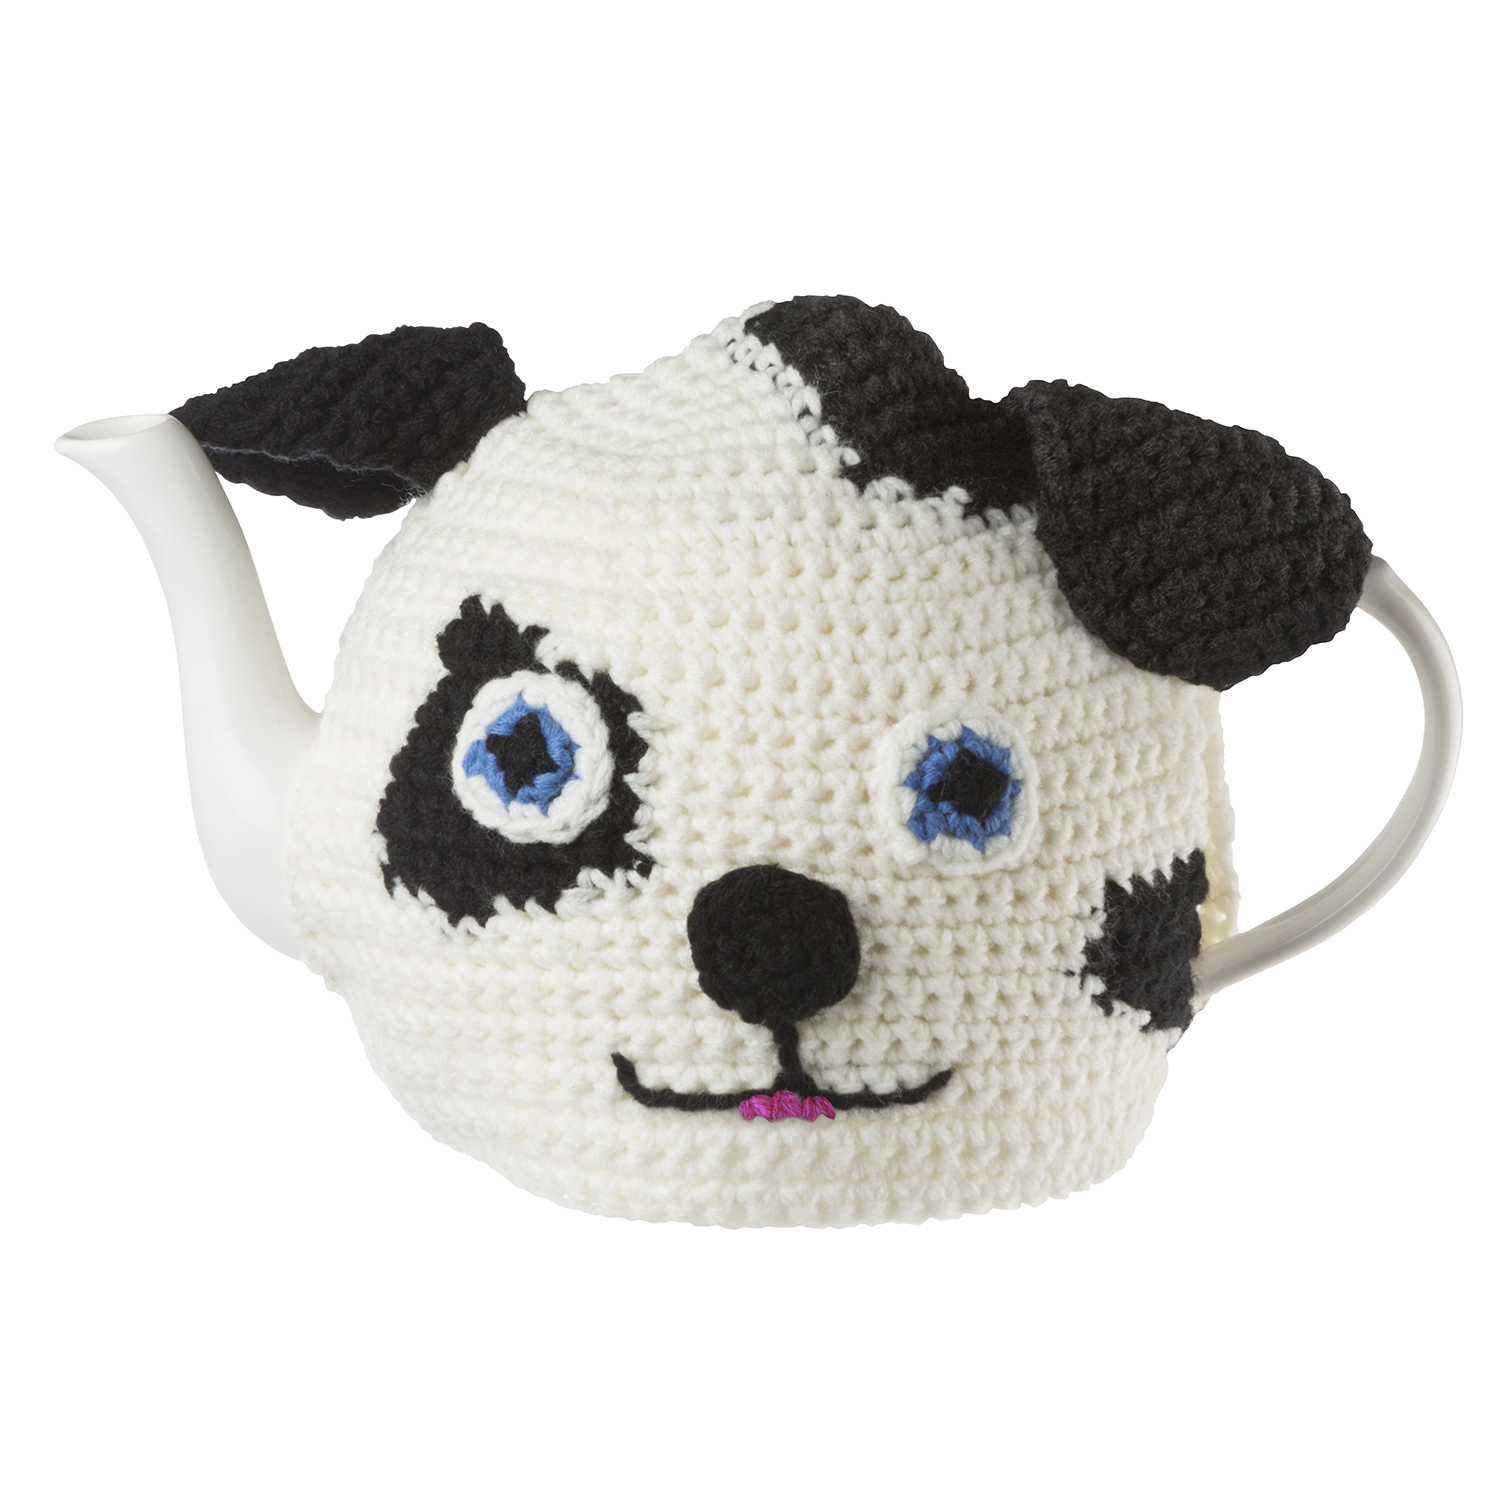 Knitted Tea Cozy - Spotty Dog